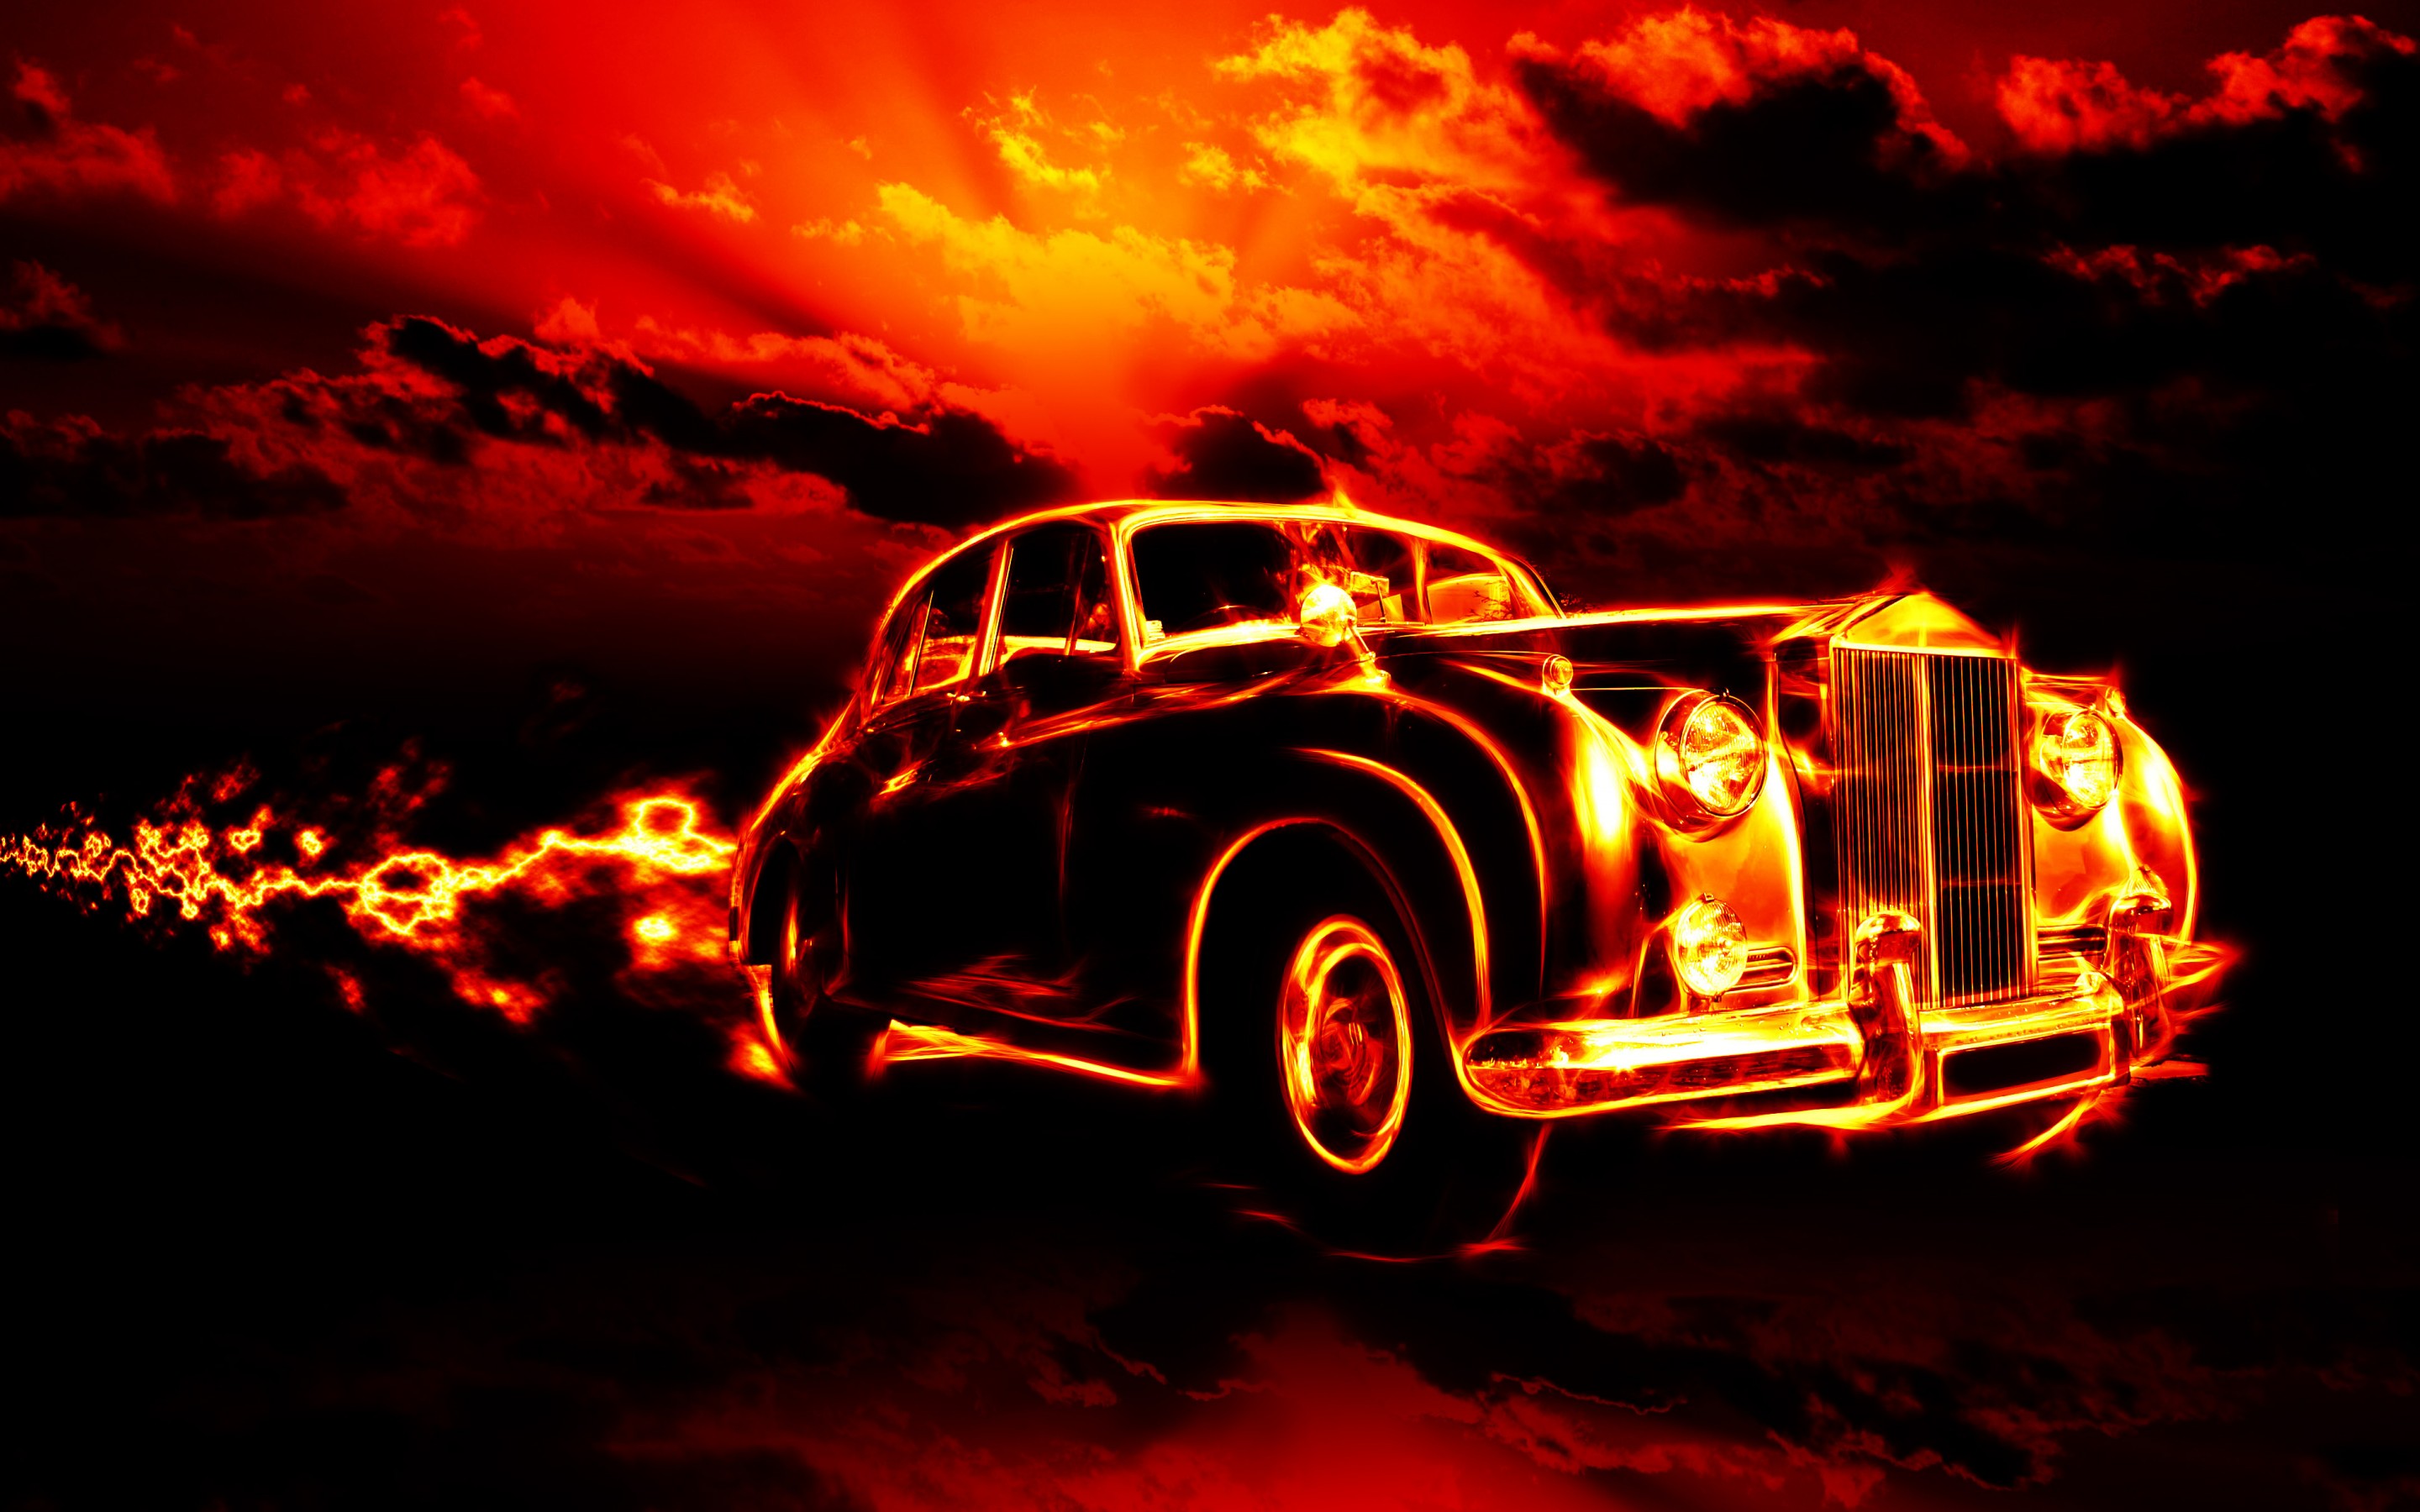 Fire Classic Car Hd Wallpapers For Desktop 2880x1800 : 